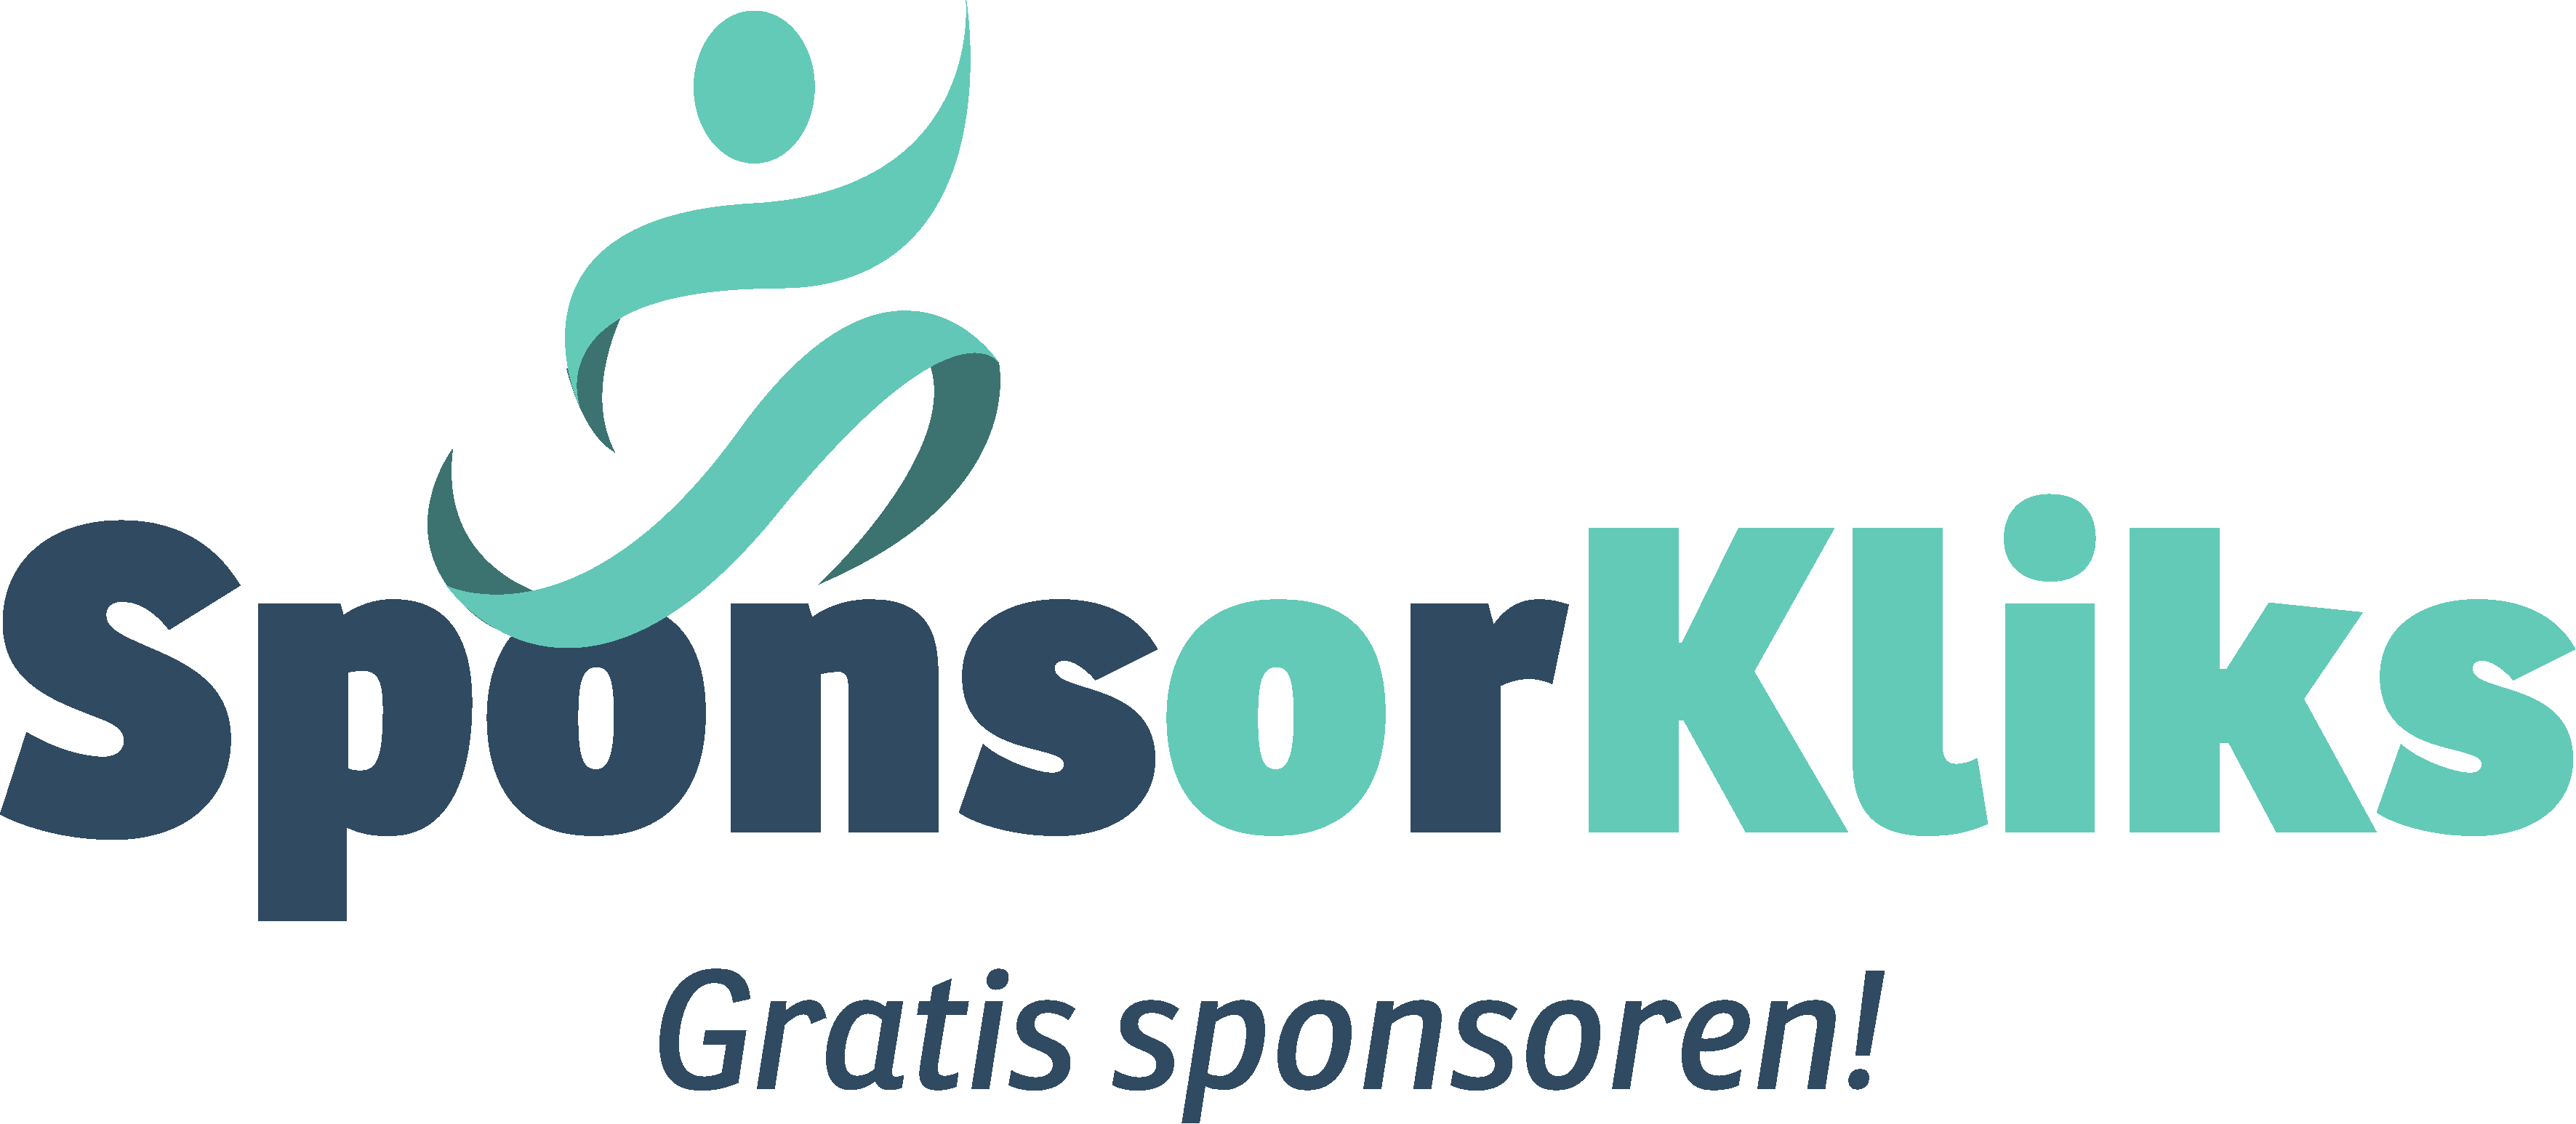 sponsorkliks_nl_white_horizontal-2.png